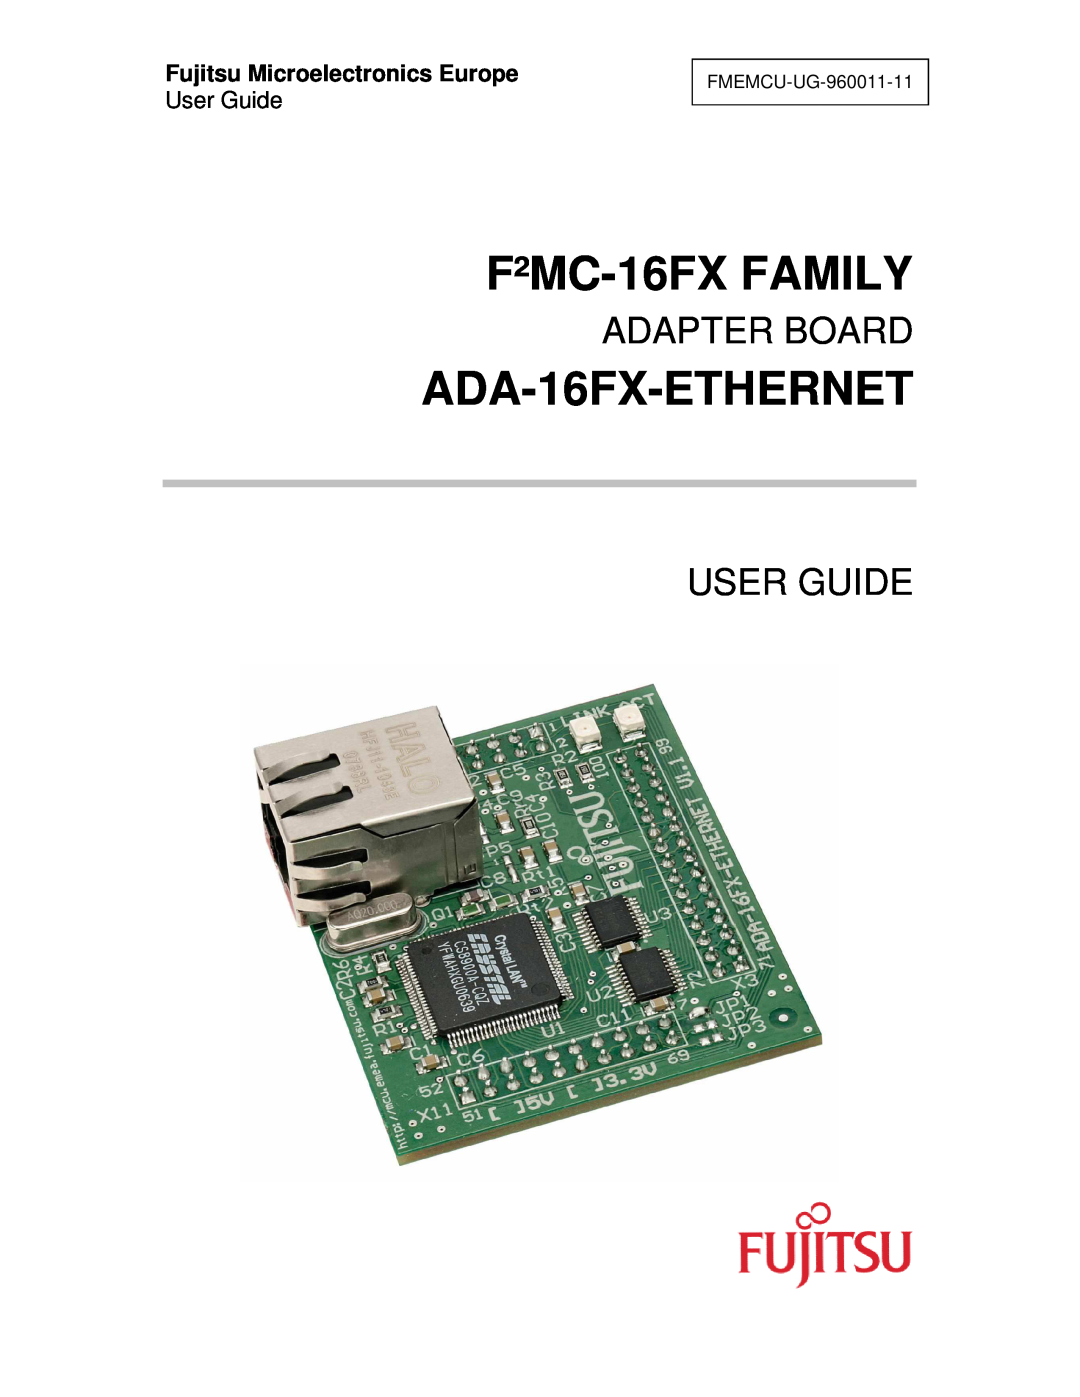 Fujitsu manual F²MC-16FX FAMILY, ADA-16FX-ETHERNET, Adapter Board, User Guide, Fujitsu Microelectronics Europe 